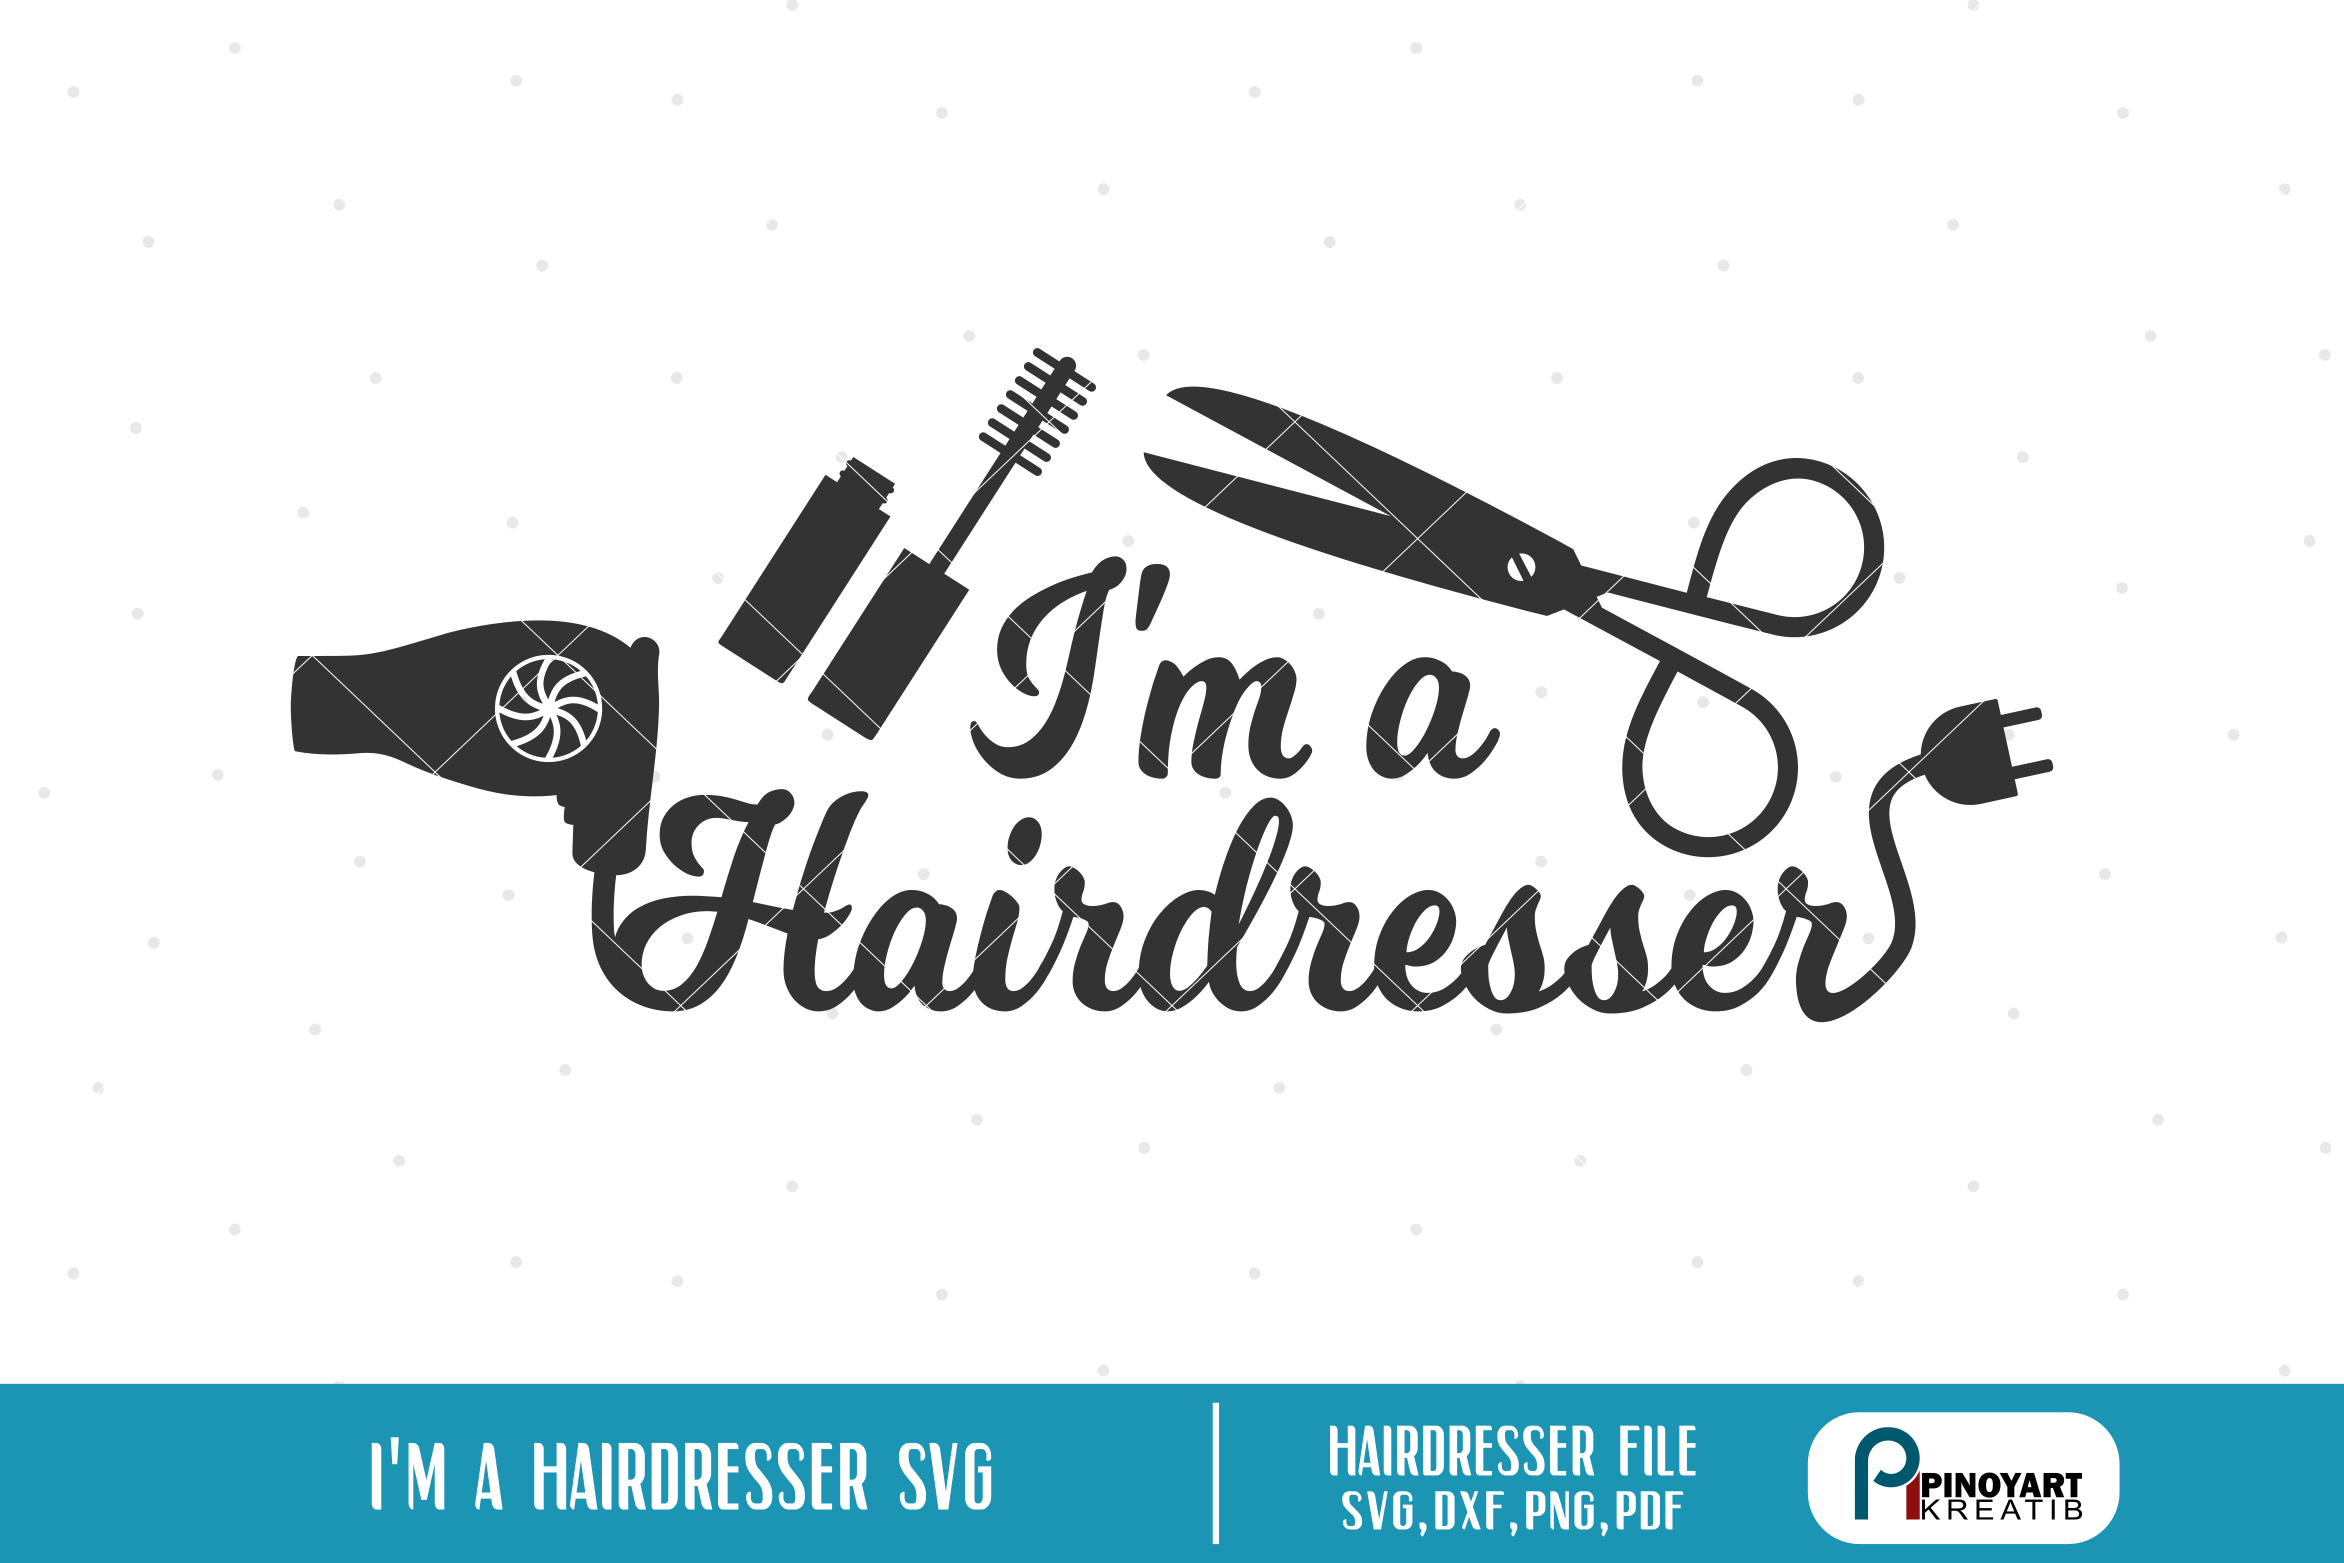 Hairdresser Monogram Svg Files - Layered SVG Cut File - Download Free